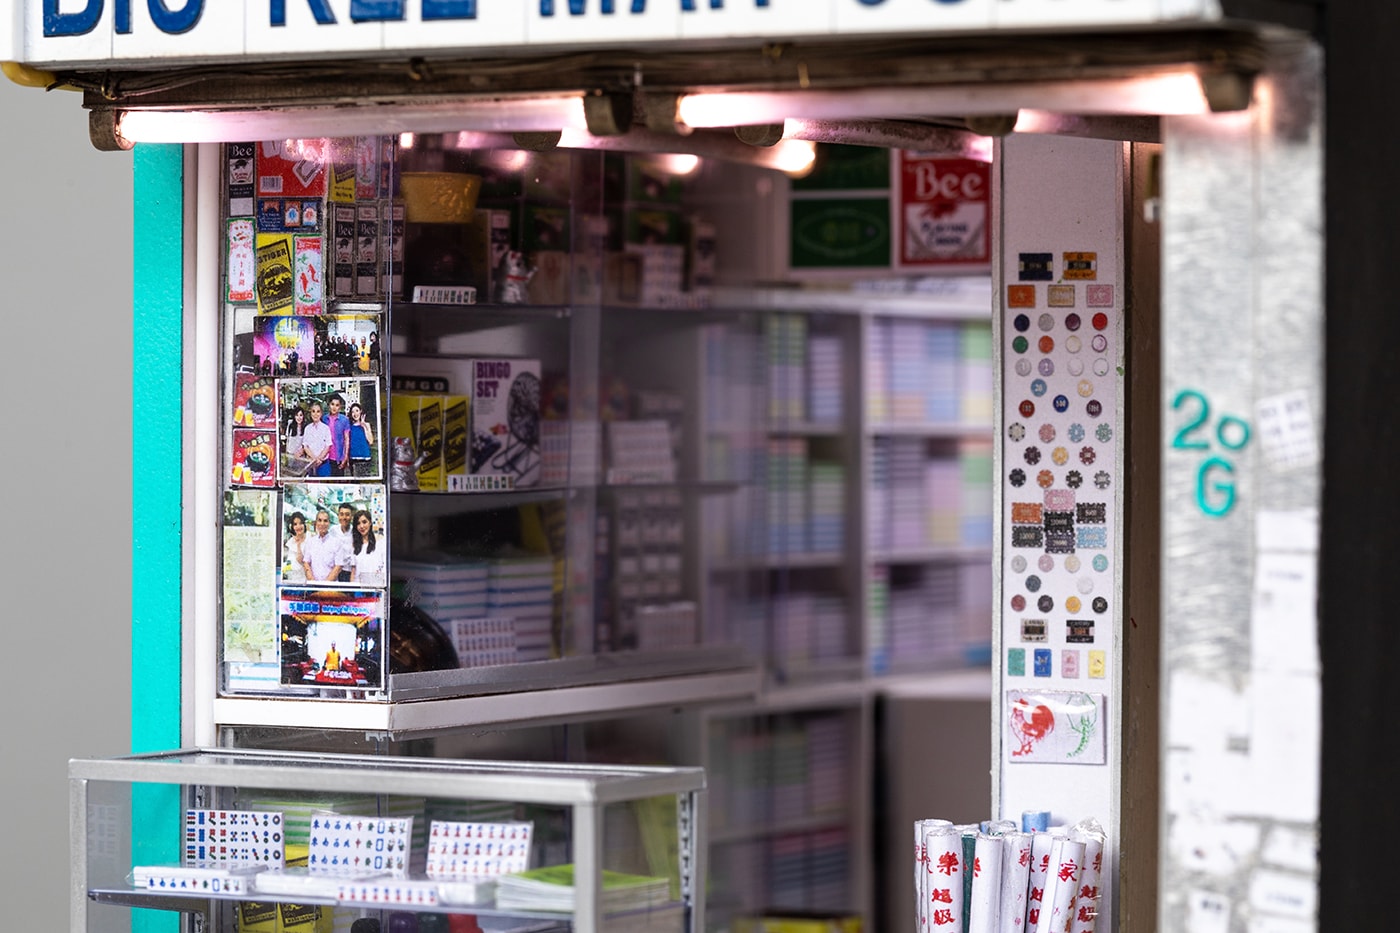 Joshua Smith Biu Kee Mahjong Hong Kong miniature model Kowloon stores retail shops Australian SCULPTURES  mahjong 